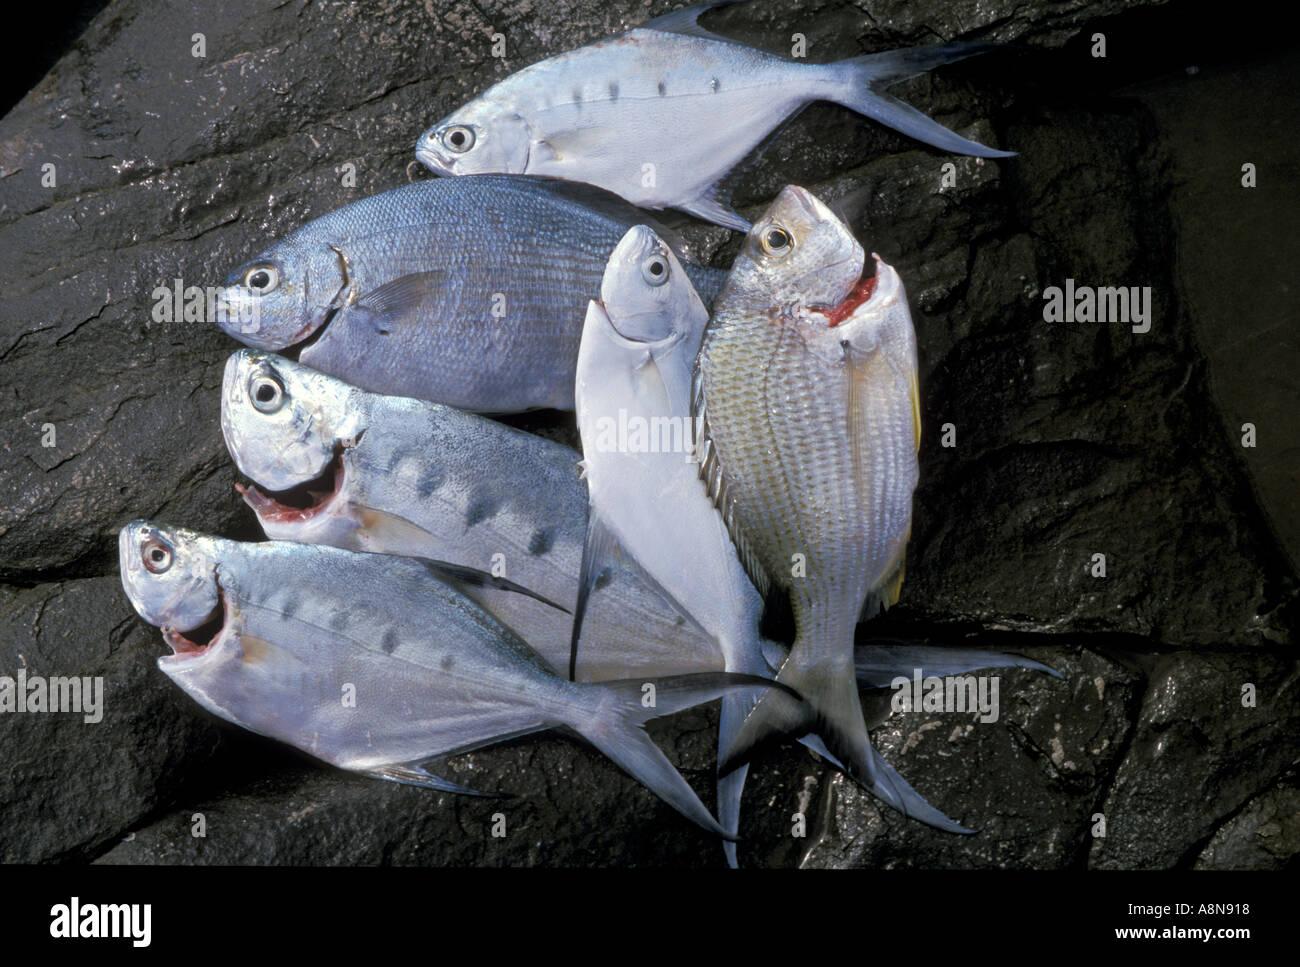 Native fish bream caught by fisherman fishing on the rocks near Noosa Queensland Australia Stock Photo